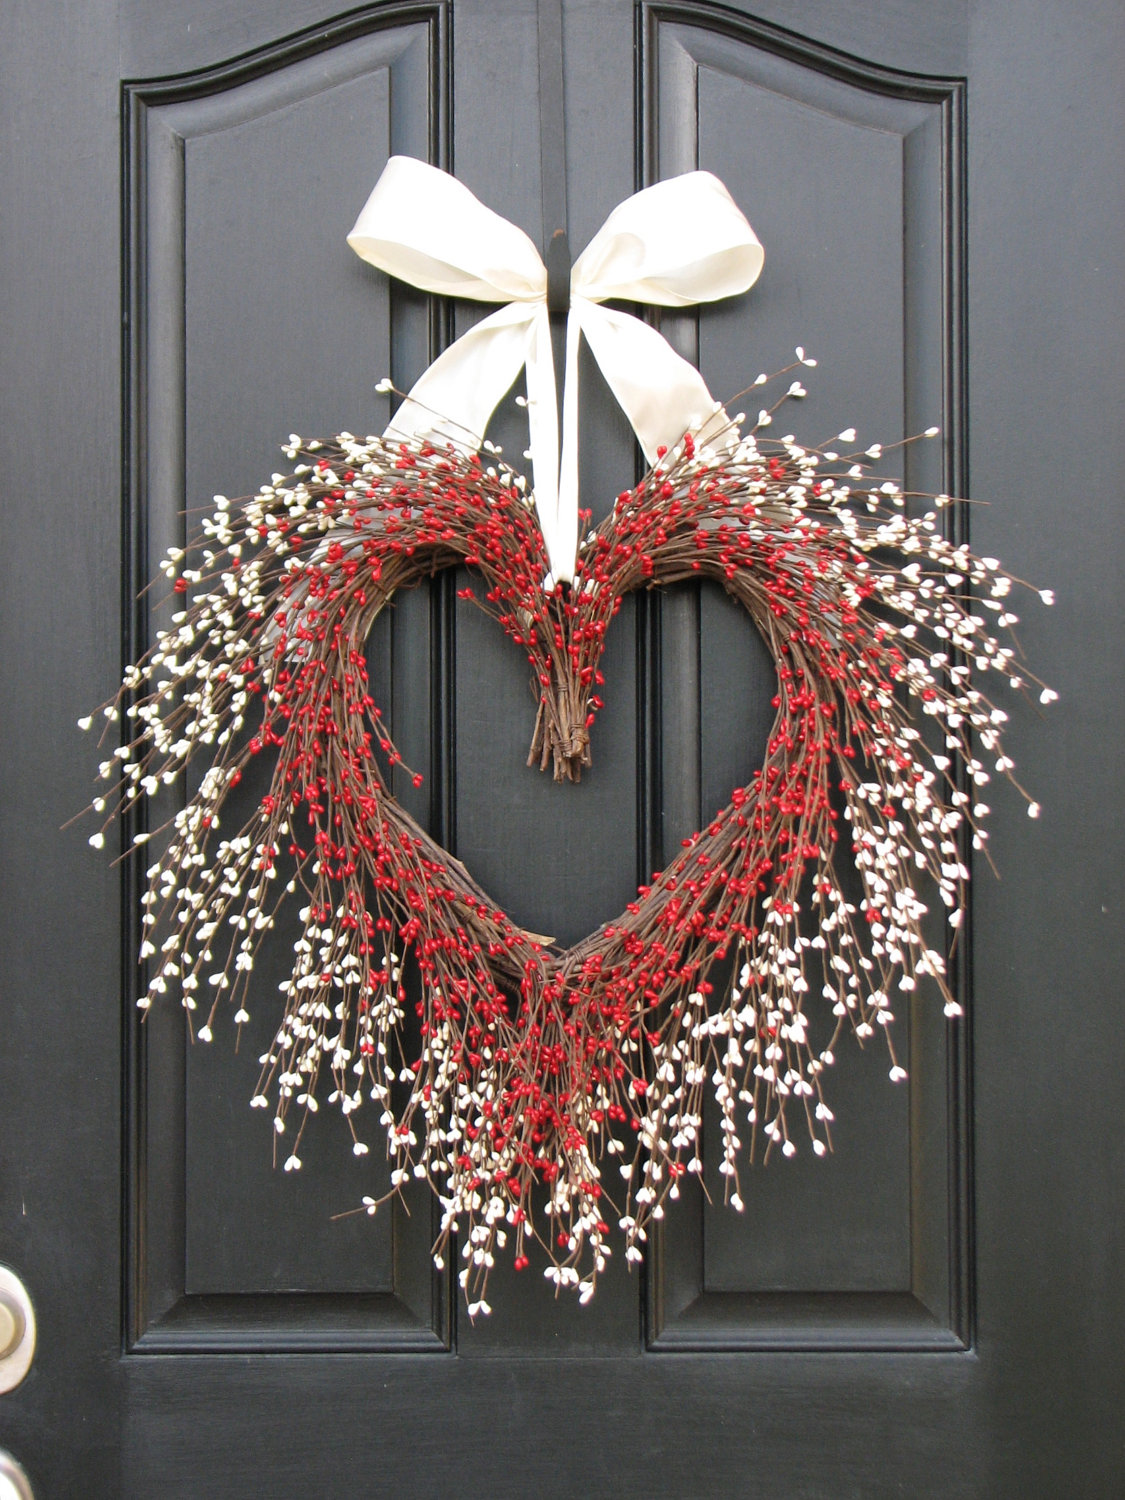 28 lovely handmade valentines wreath designs 17.jpg